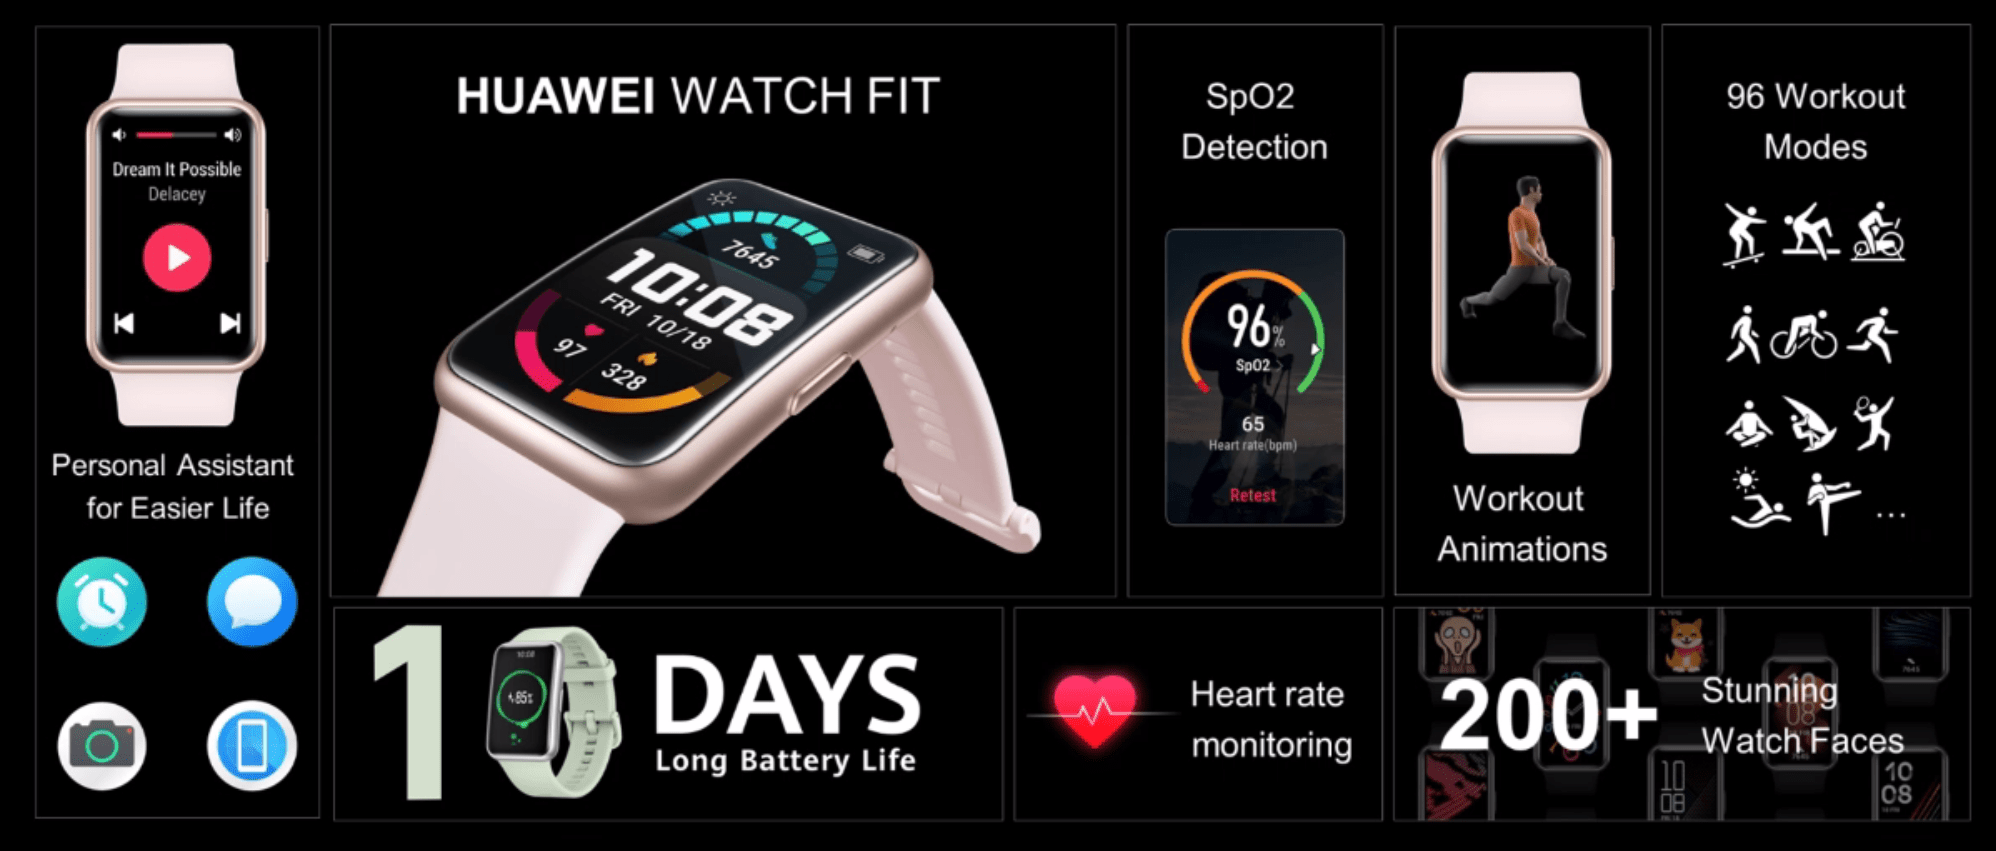 Приложение для часов Huawei. One hope Huawei часы. Сон на часах Huawei Fit. Wearfit Pro часы.